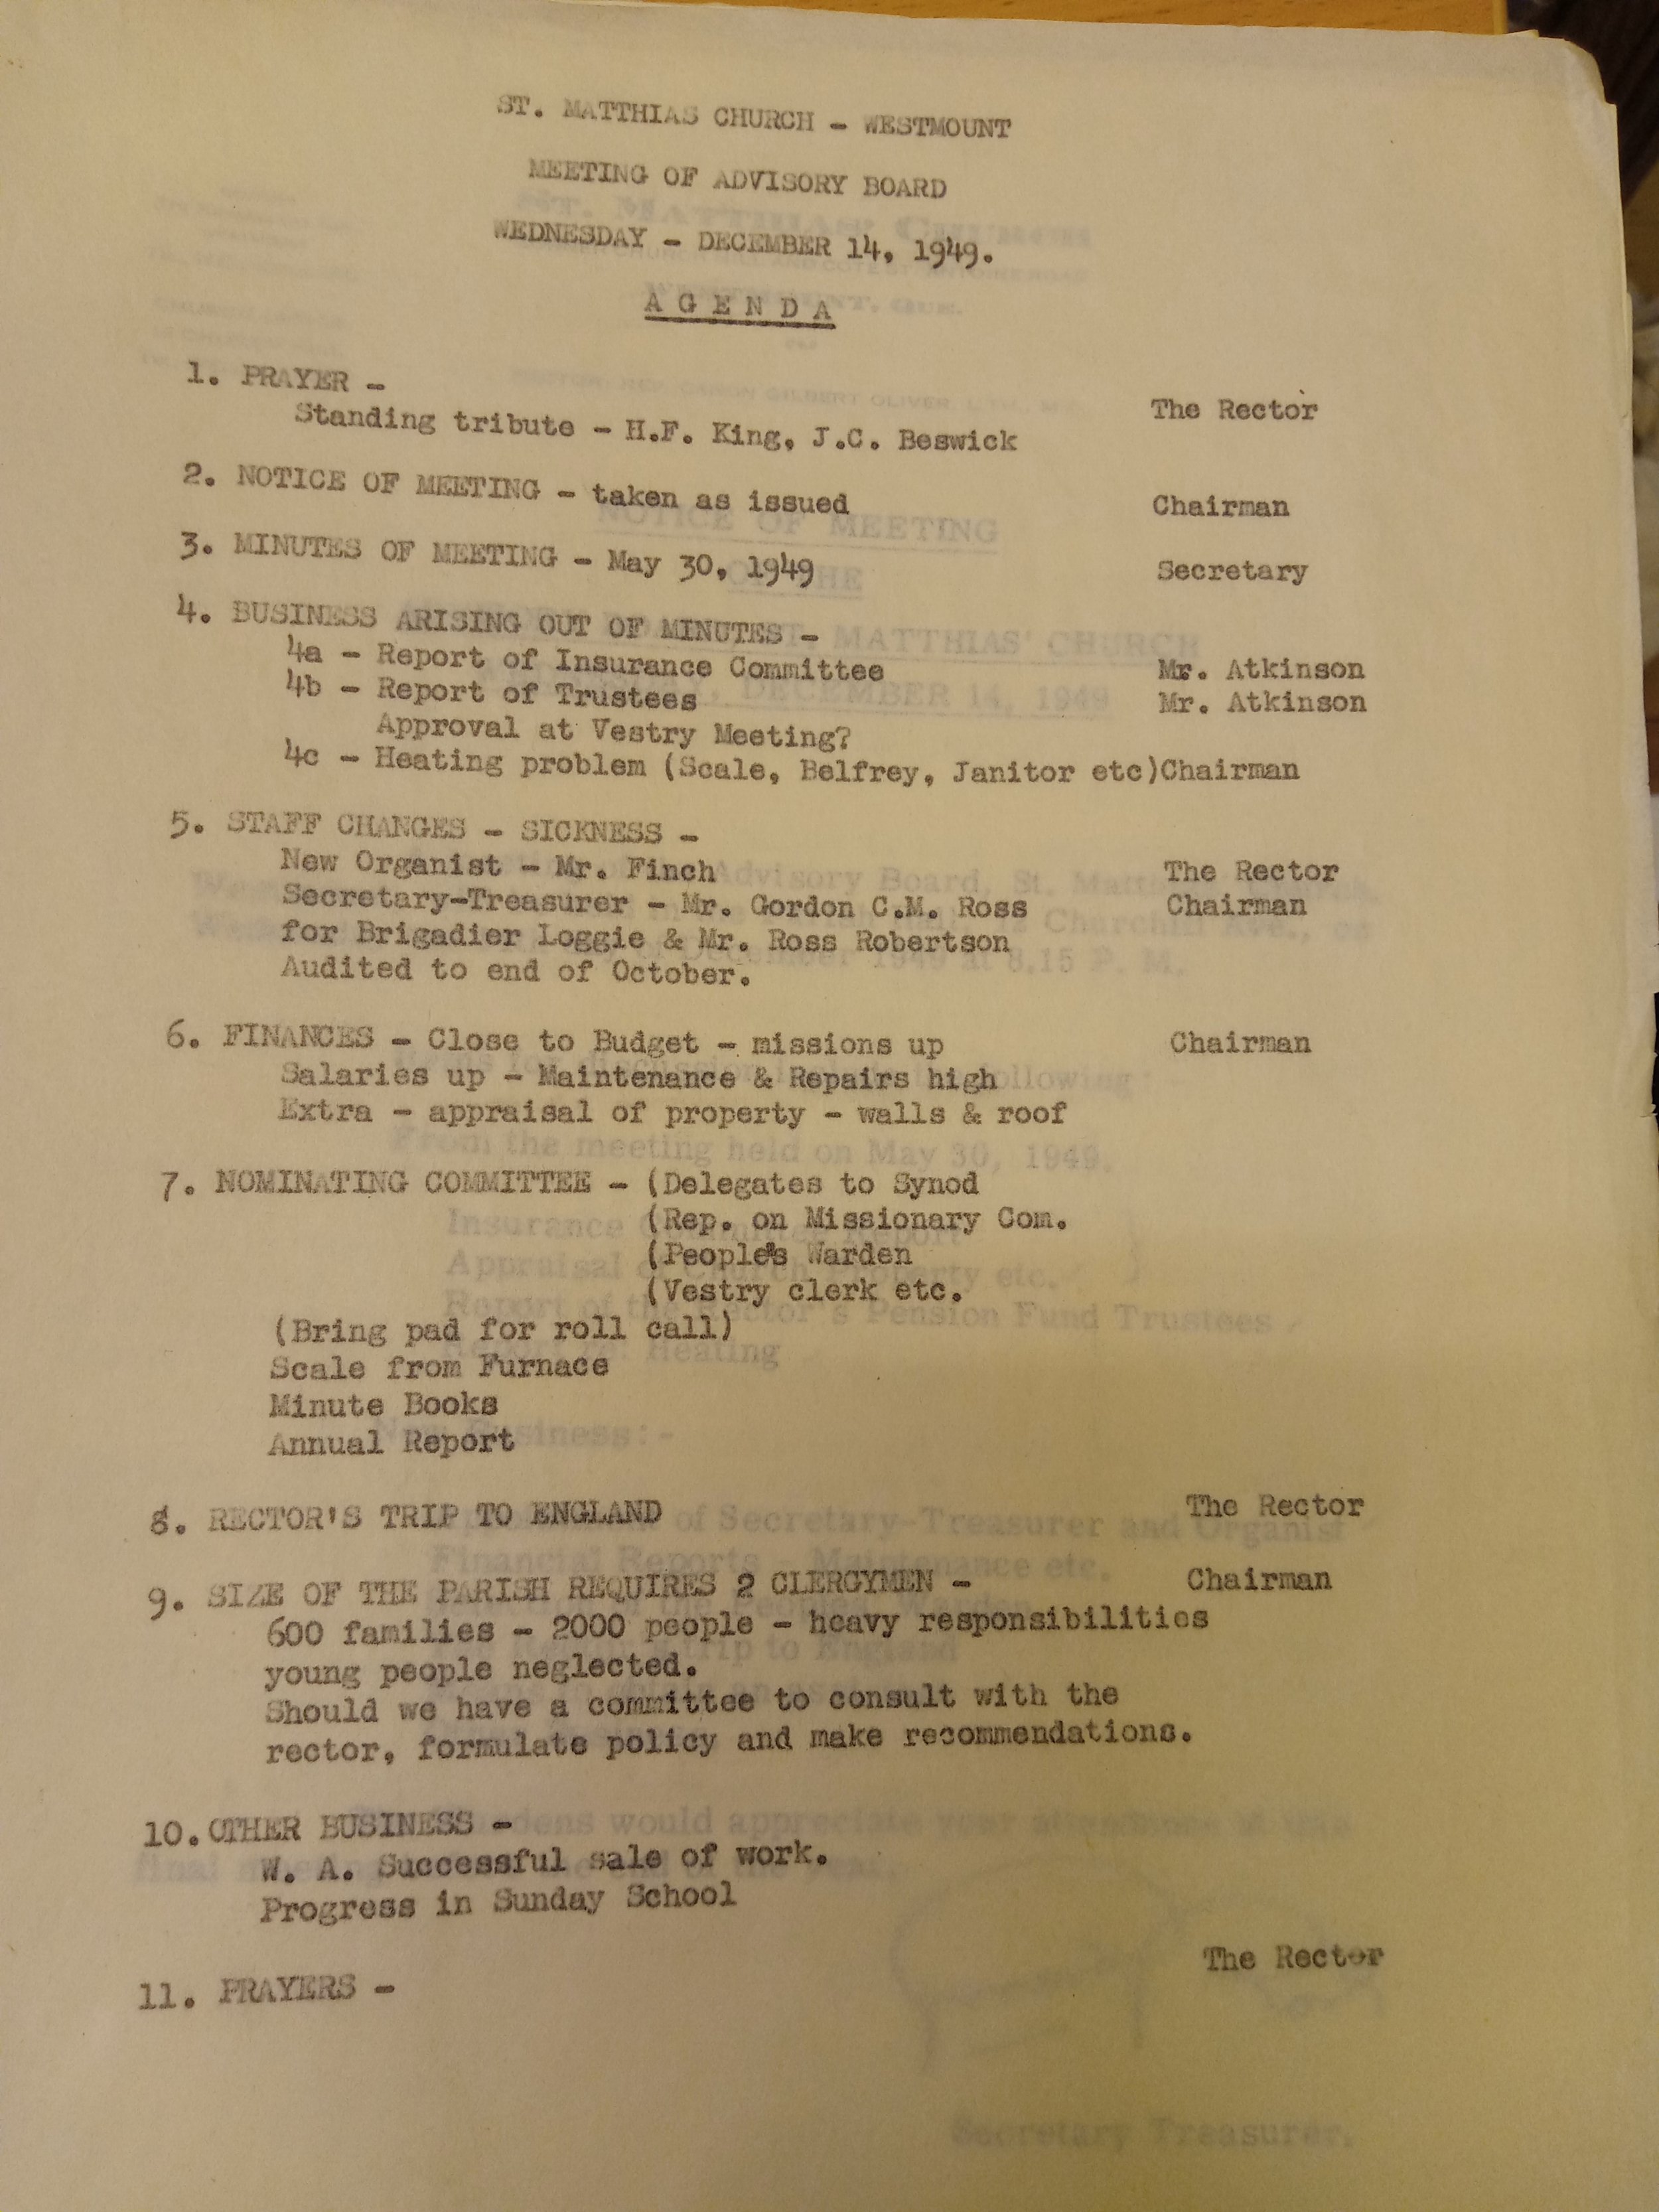 Advisory Board Minutes Dec 1949.jpg